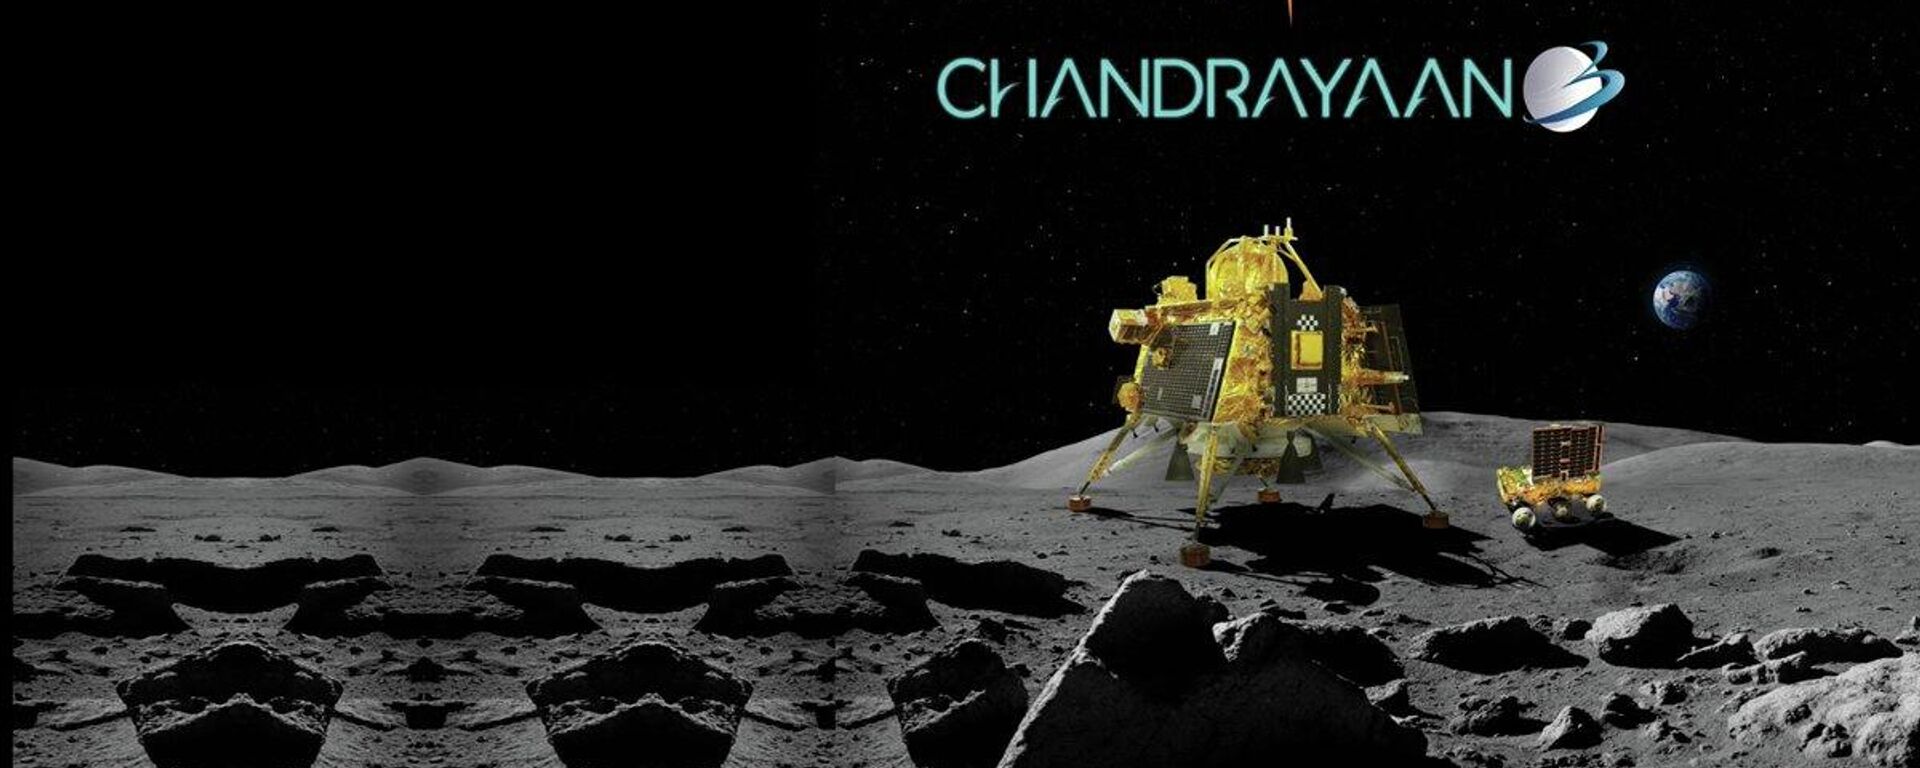 Indians Slam British Journos Over Mocking 'Chandrayaan' Moon Landing